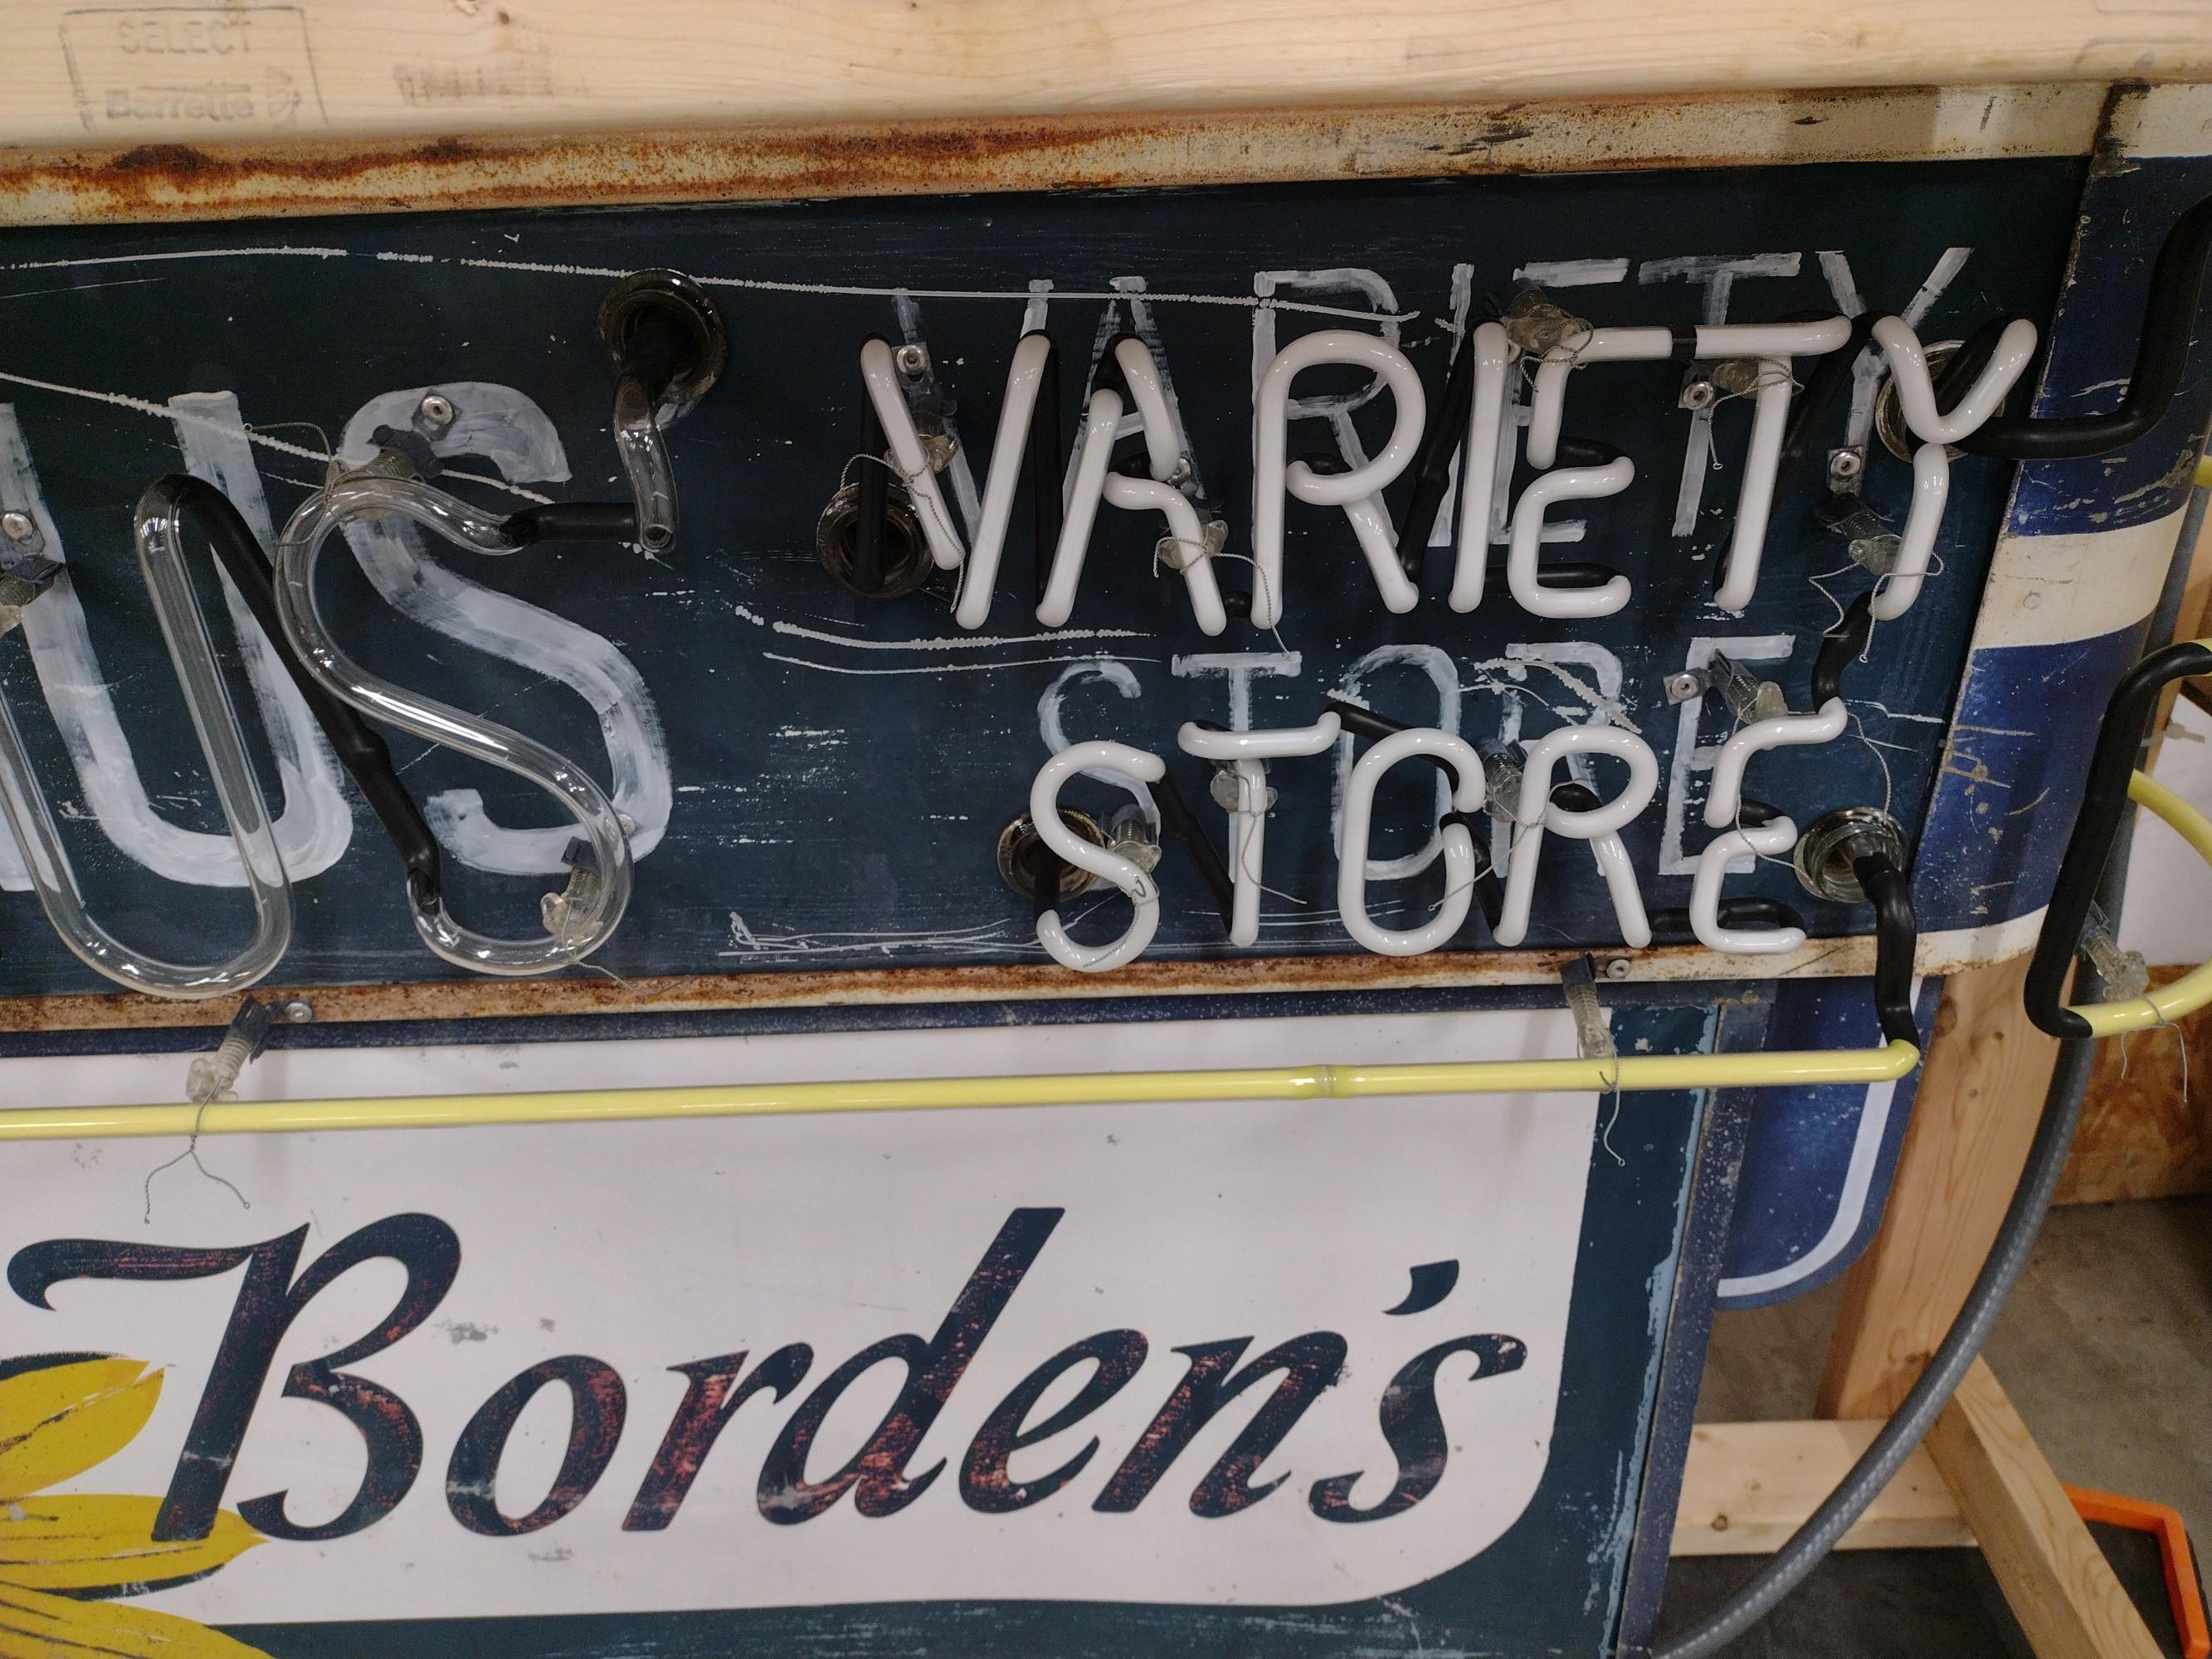 Vintage Double-Sided Tin Borden's Ice Cream Neon Sign